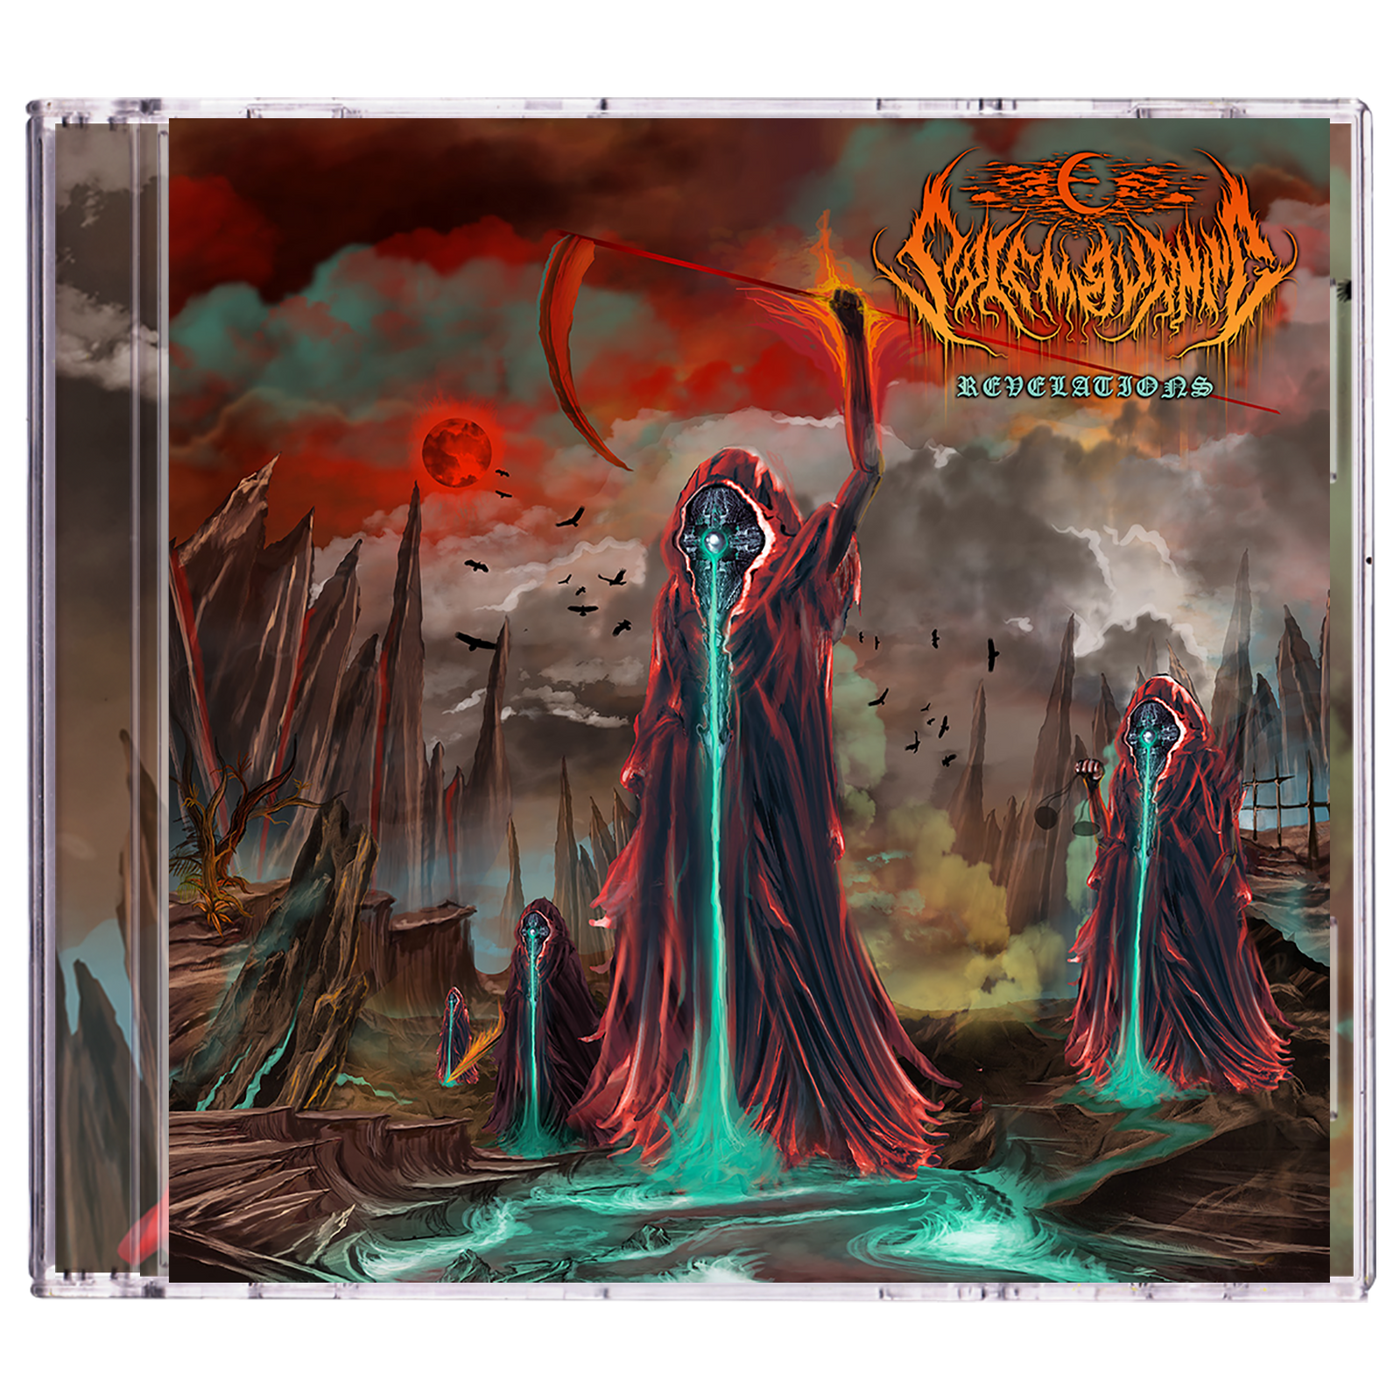 Salem Burning 'Revelations' CD